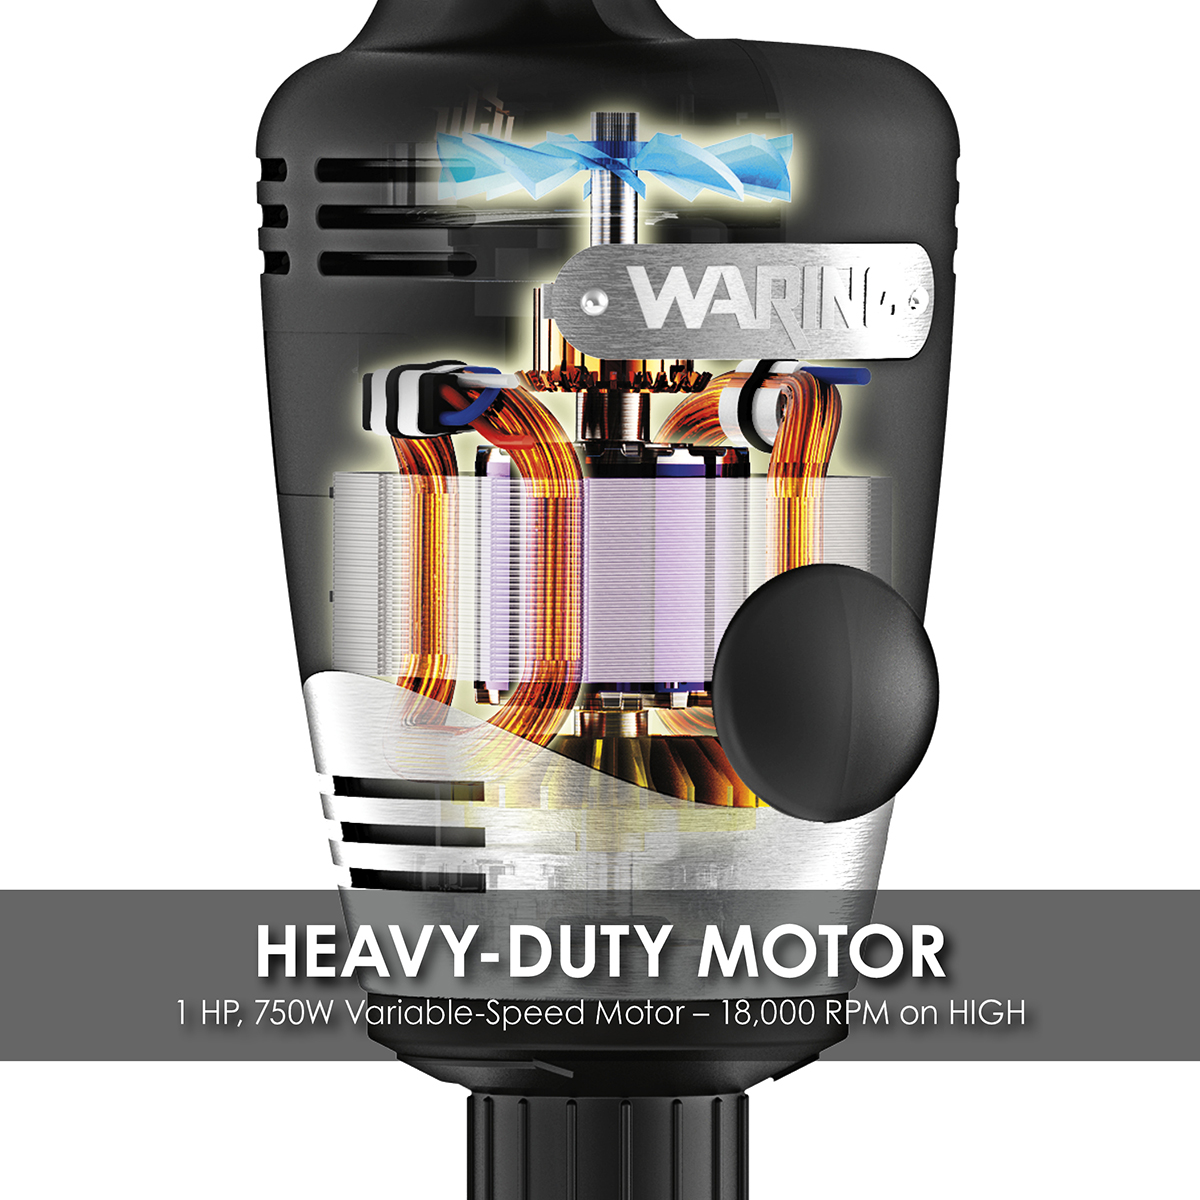 WSBPPW - Heavy-Duty Big Stik Immersion Blender with 10 Whisk Attach